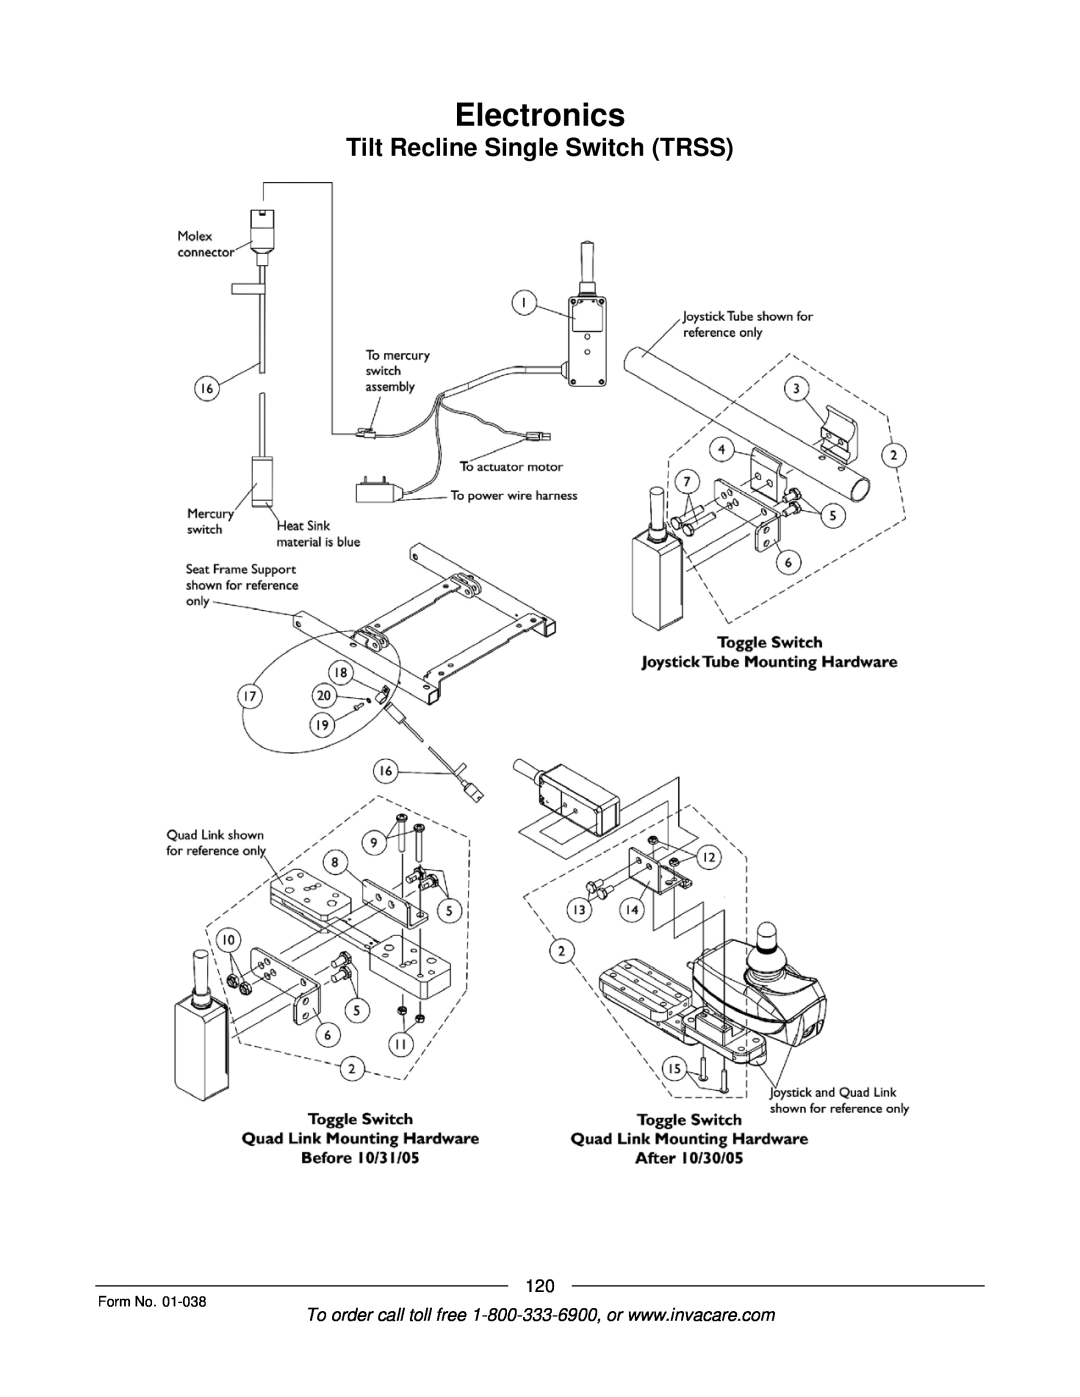 Invacare ESS-PTO, PTO-STM manual Electronics, Tilt Recline Single Switch TRSS, Form No 